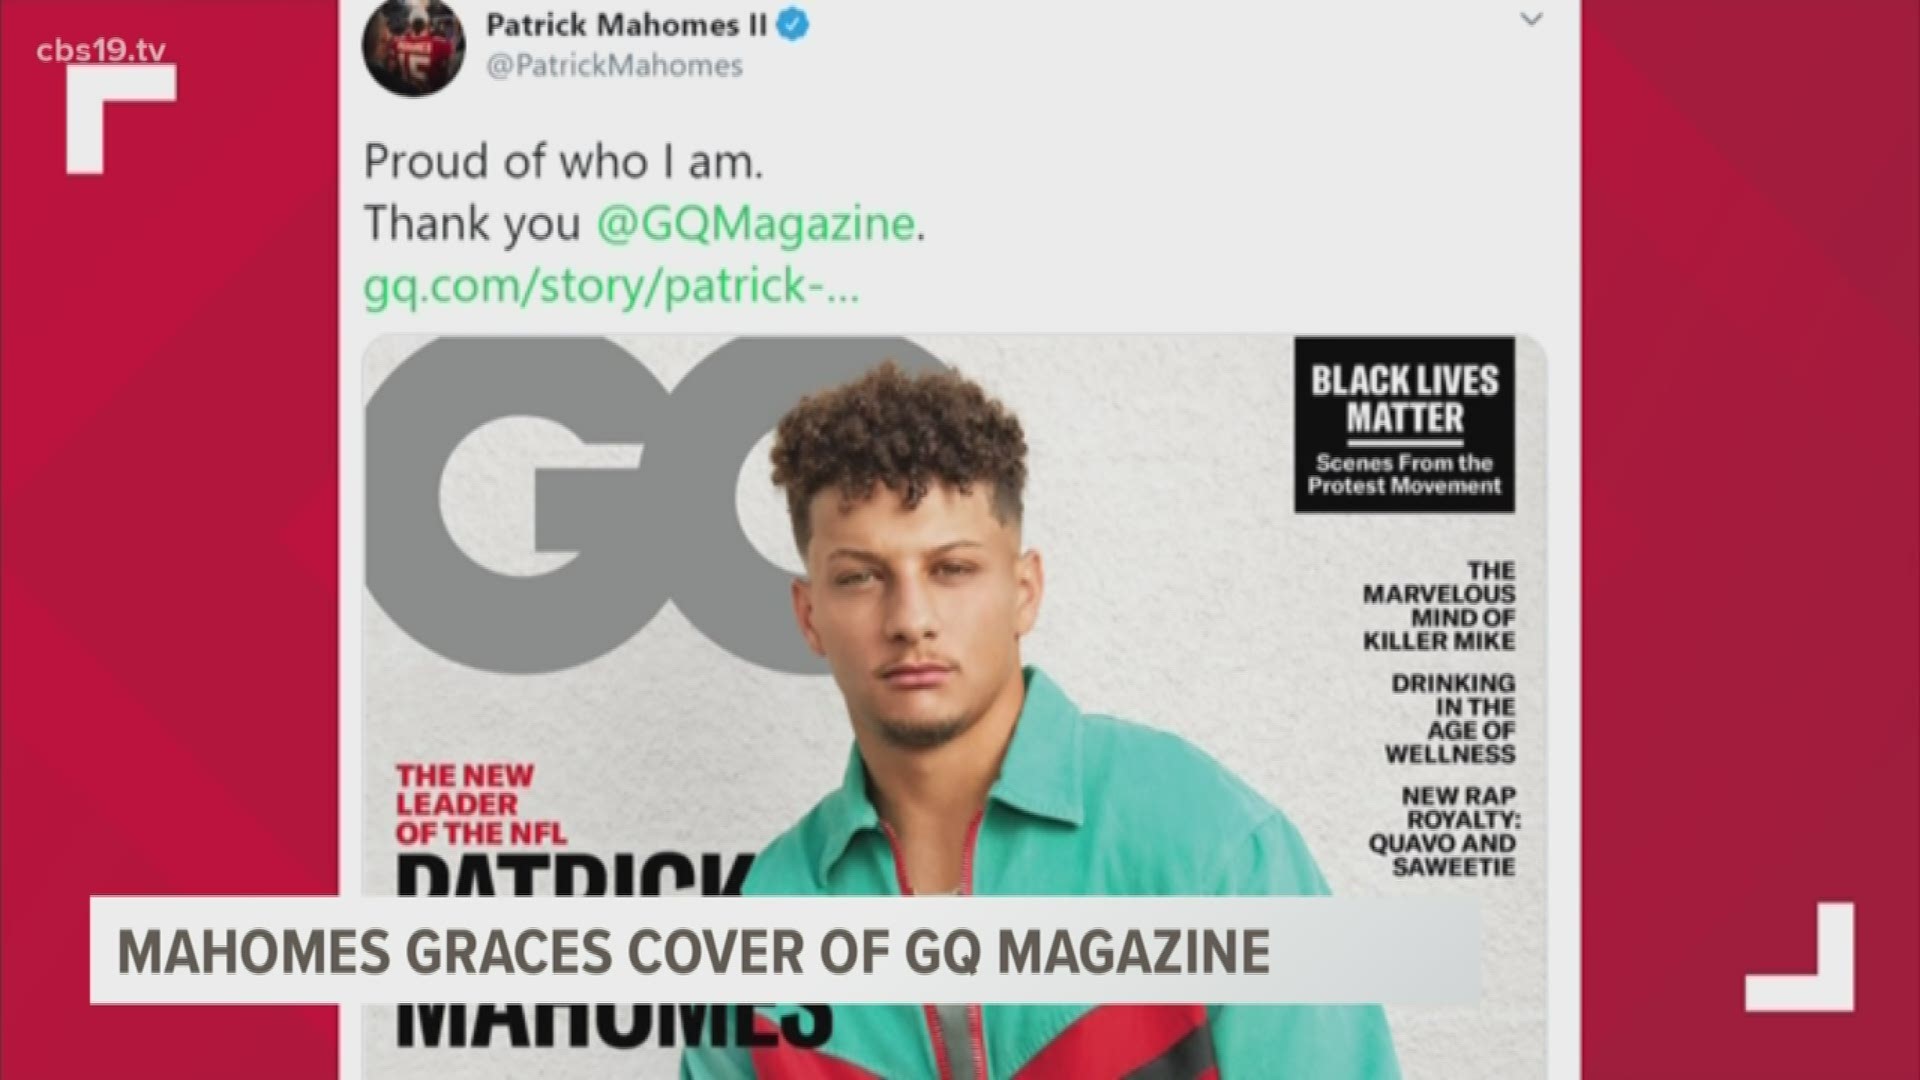 Patrick Mahomes Lands Cover Of Gq Magazine Cbs19 Tv